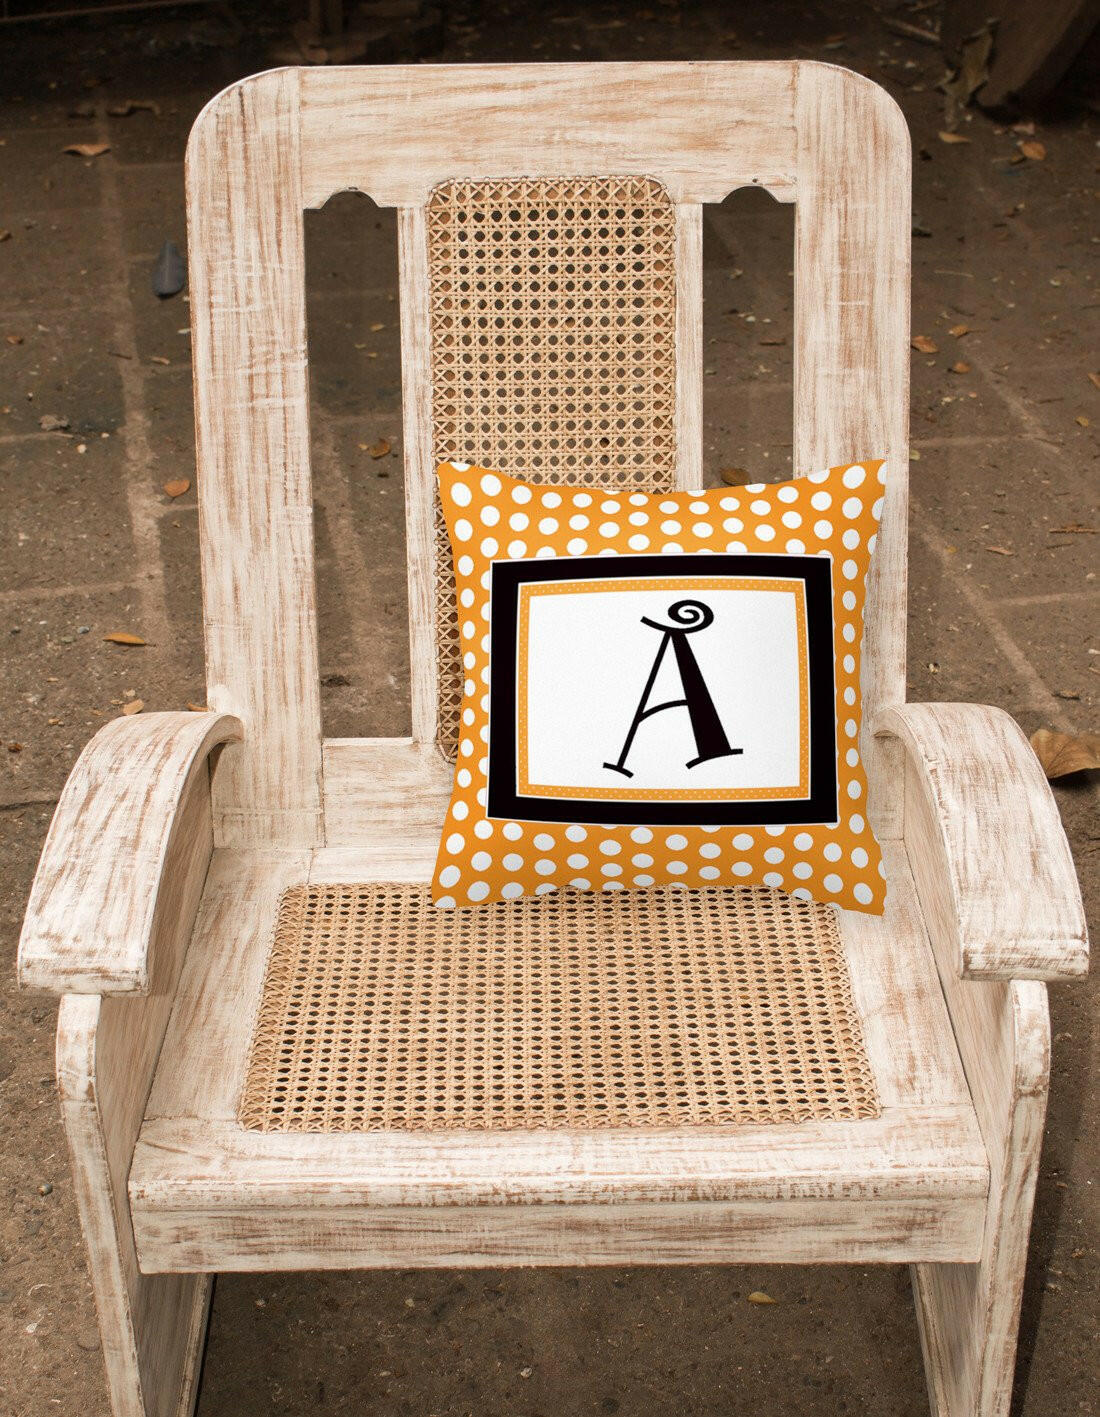 Letter A Monogram - Orange and Black Polka Dots Fabric Decorative Pillow CJ1033-APW1414 - the-store.com